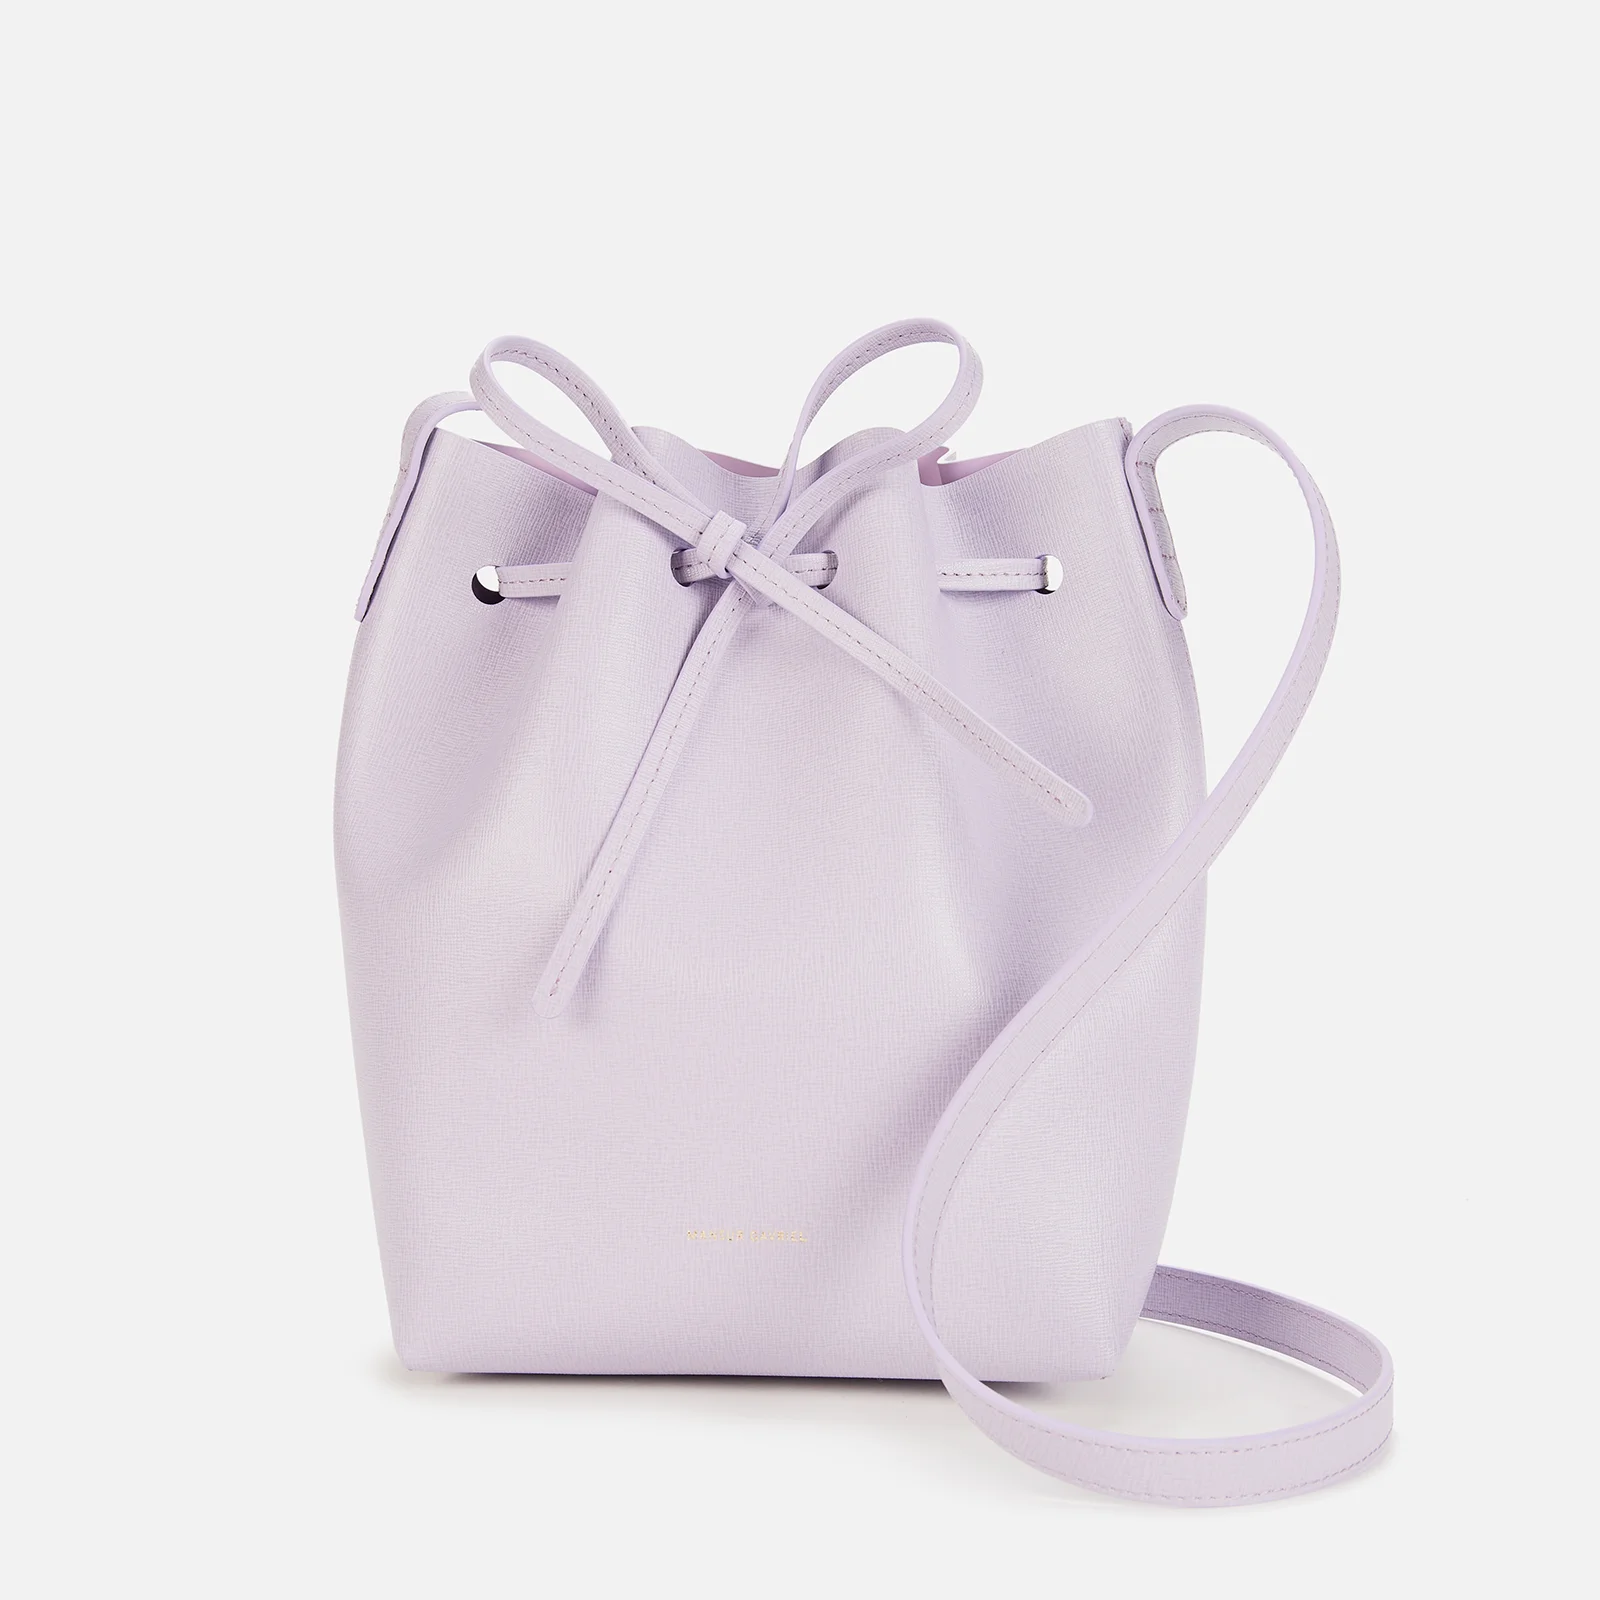 Mansur Gavriel Women's Mini Bucket Bag - Lavender Image 1